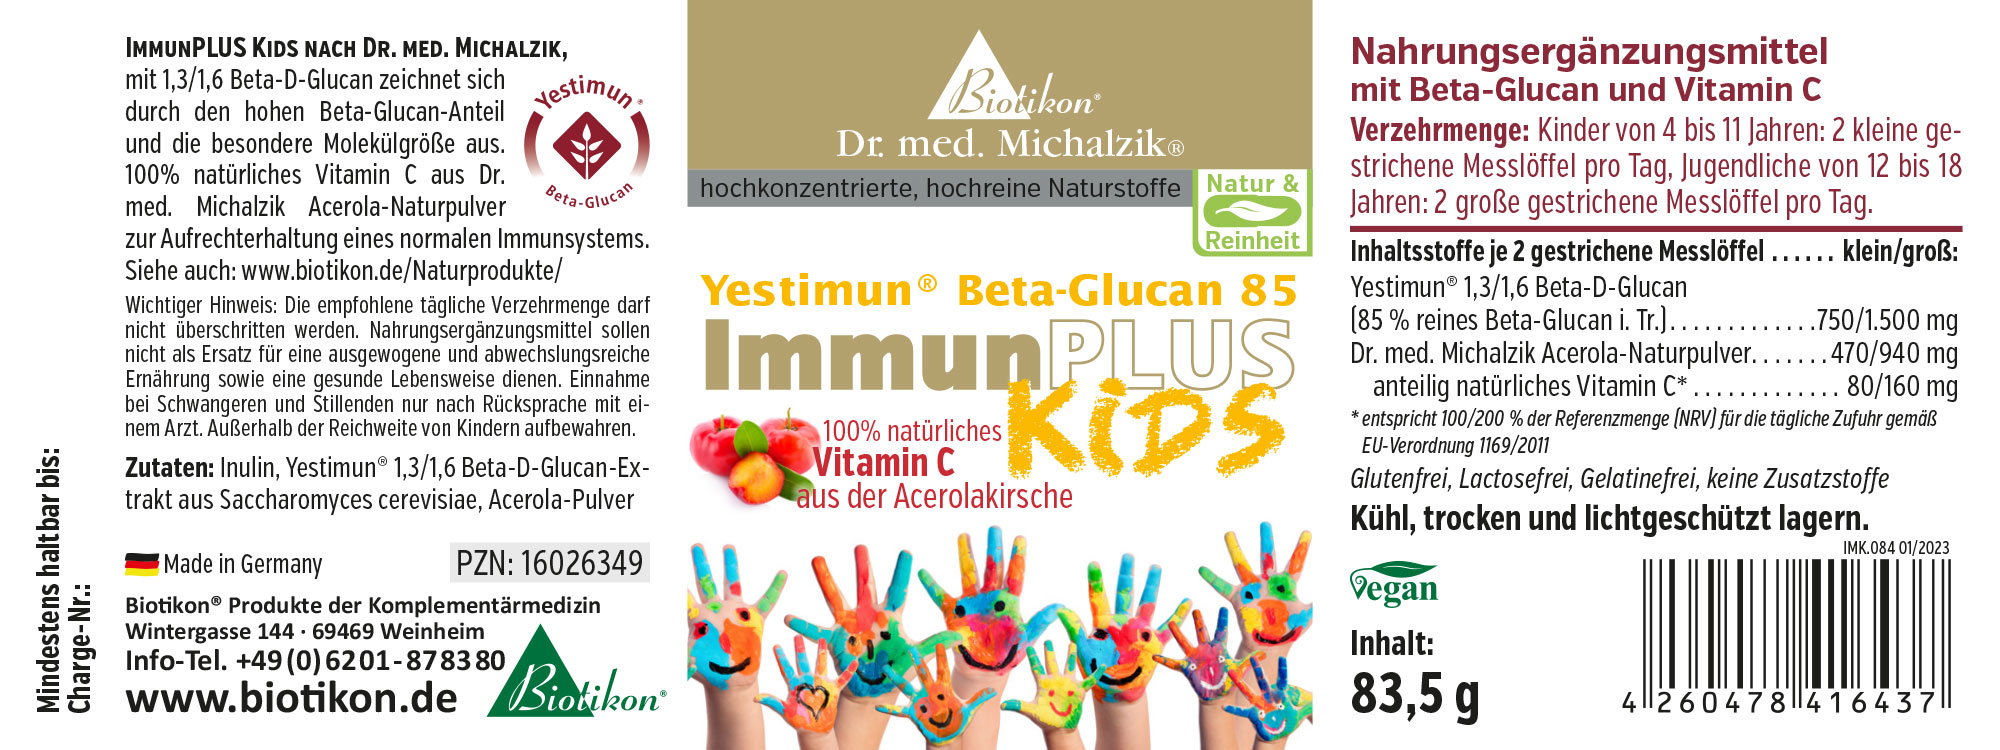 ImmunPLUS Kids nach Dr. med. Michalzik